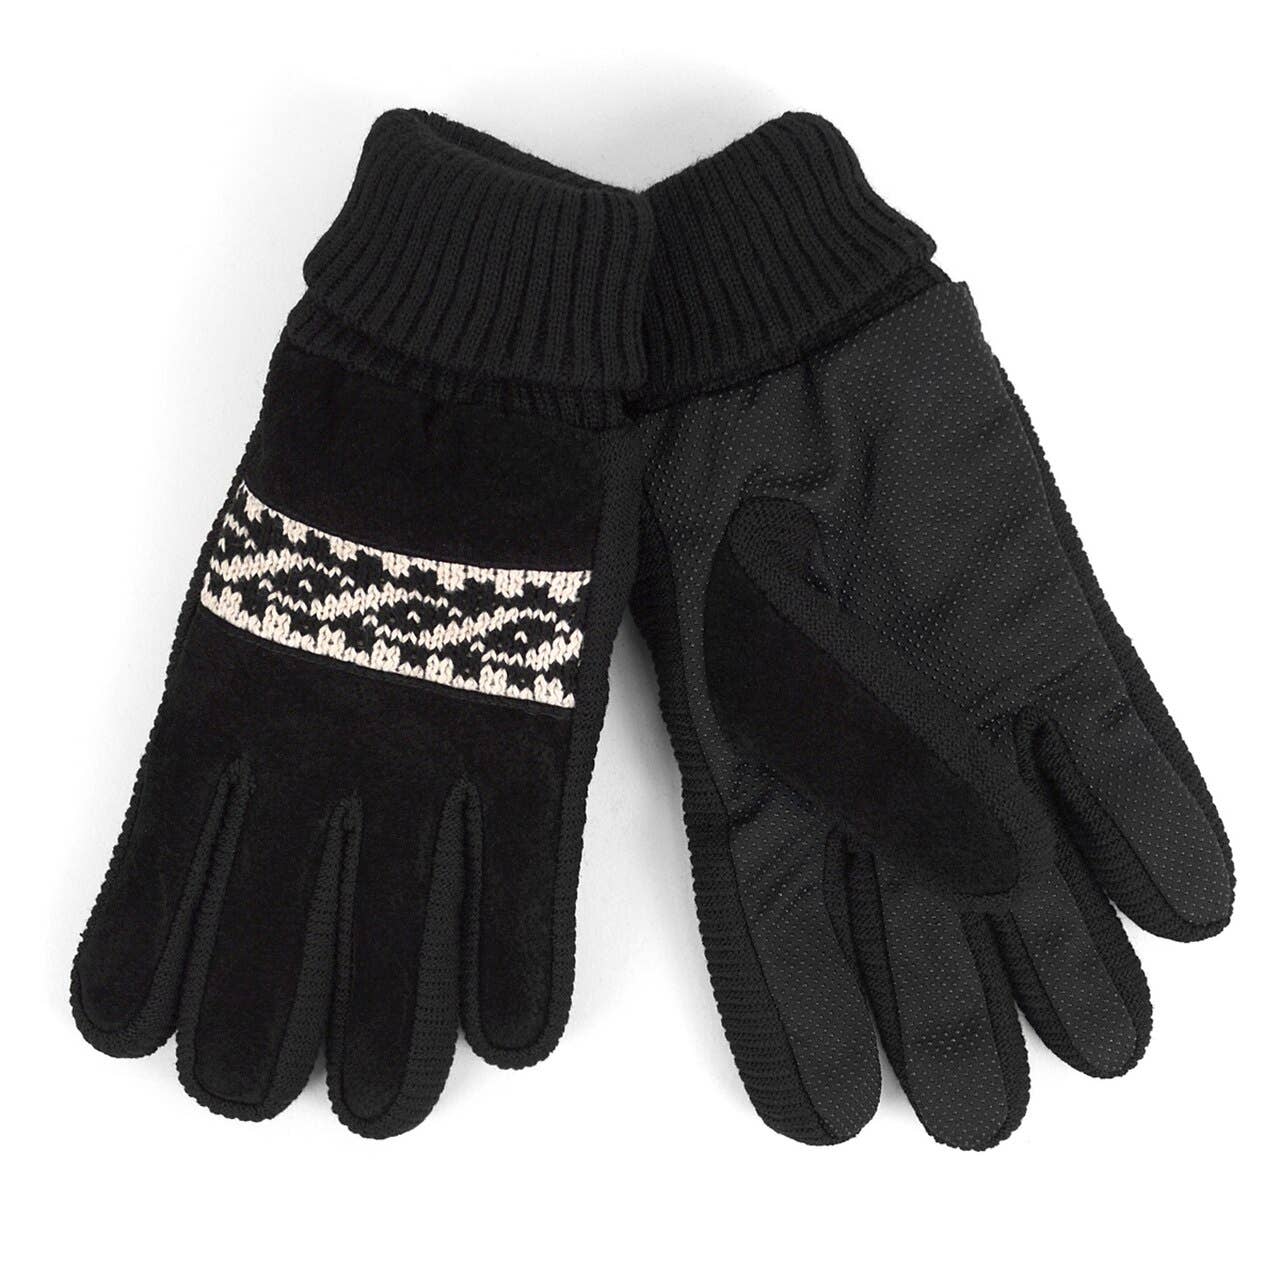 Men's Genuine Leather Non Slip Grip Winter Gloves: Black / L/XL